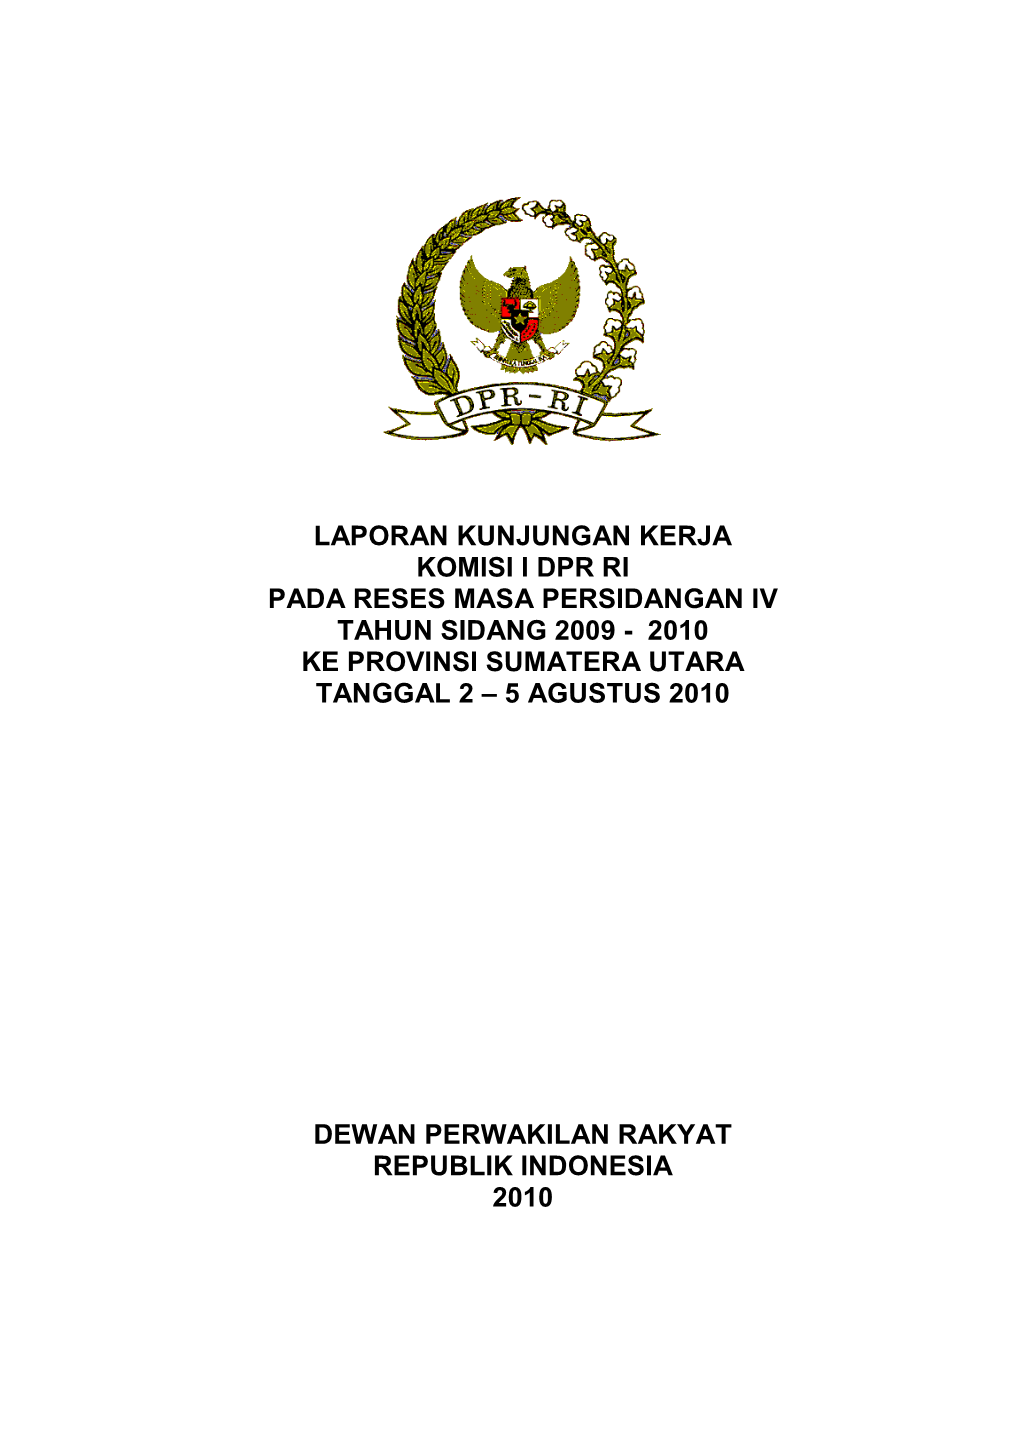 Laporan Kunjungan Kerja Komisi I Dpr Ri Pada Reses Masa Persidangan Iv Tahun Sidang 2009 - 2010 Ke Provinsi Sumatera Utara Tanggal 2 – 5 Agustus 2010